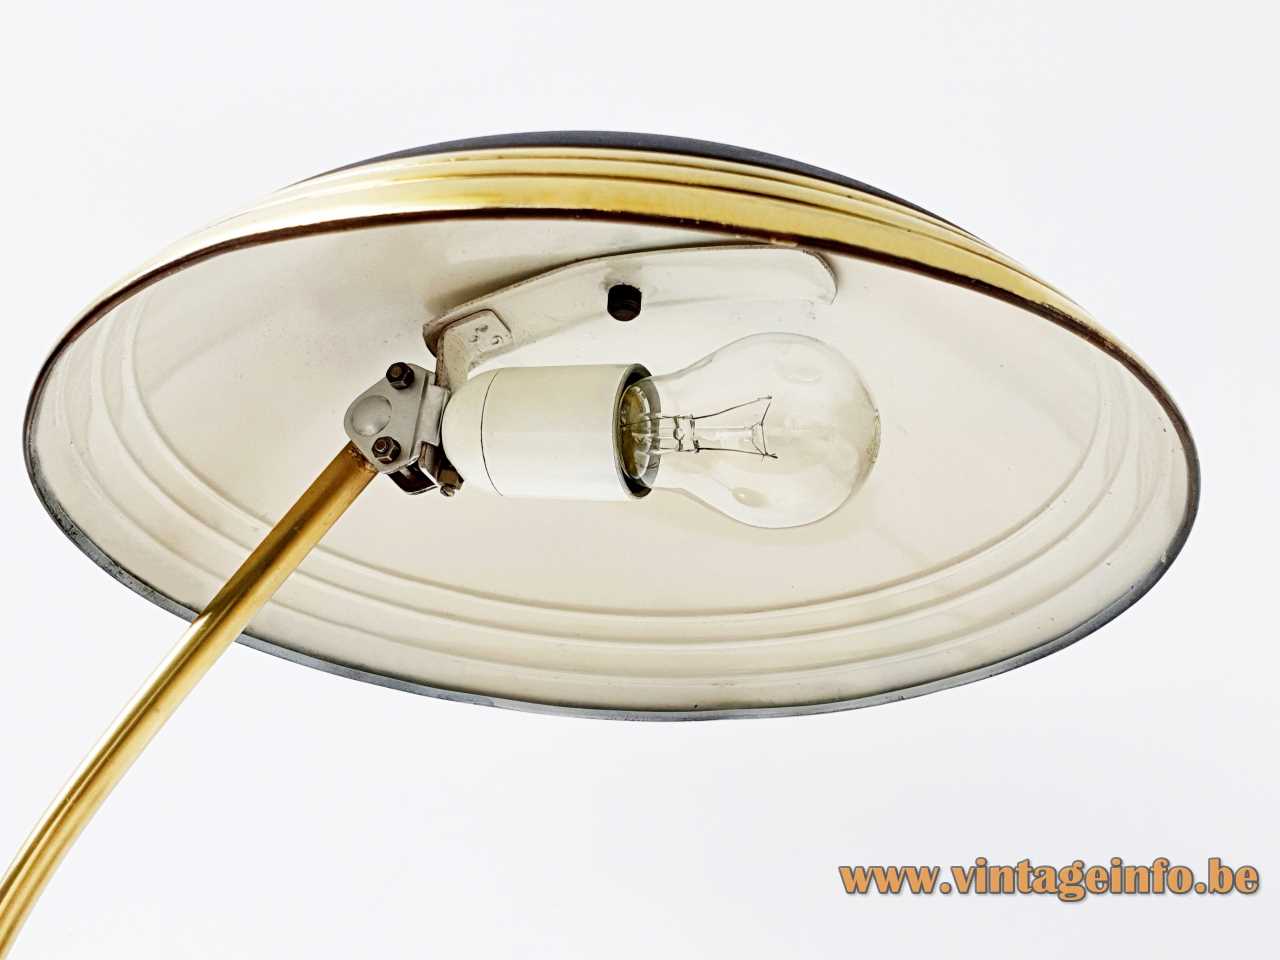 Black Helo Leuchten desk lamp round brass base rings mushroom lampshade curved rod 1950s 1960s Germany